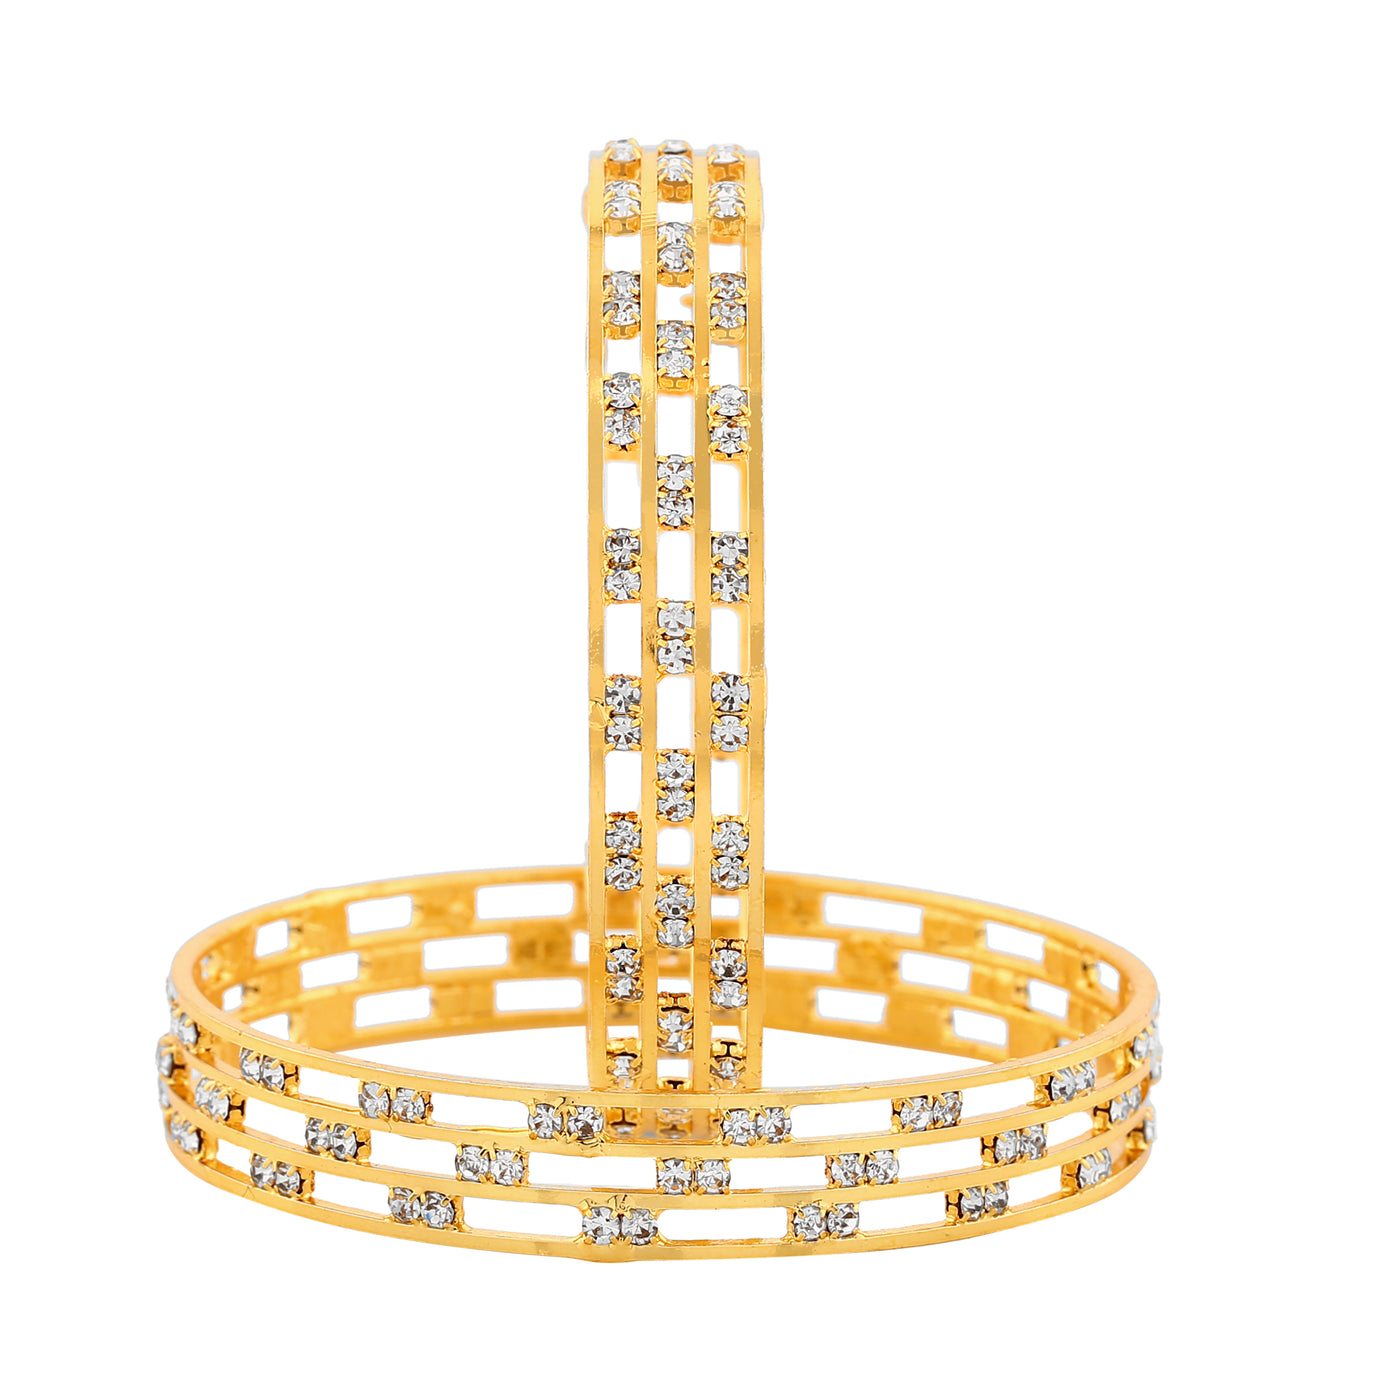 Estele Gold Plated Elegant Bangle Set with Crystals for Women